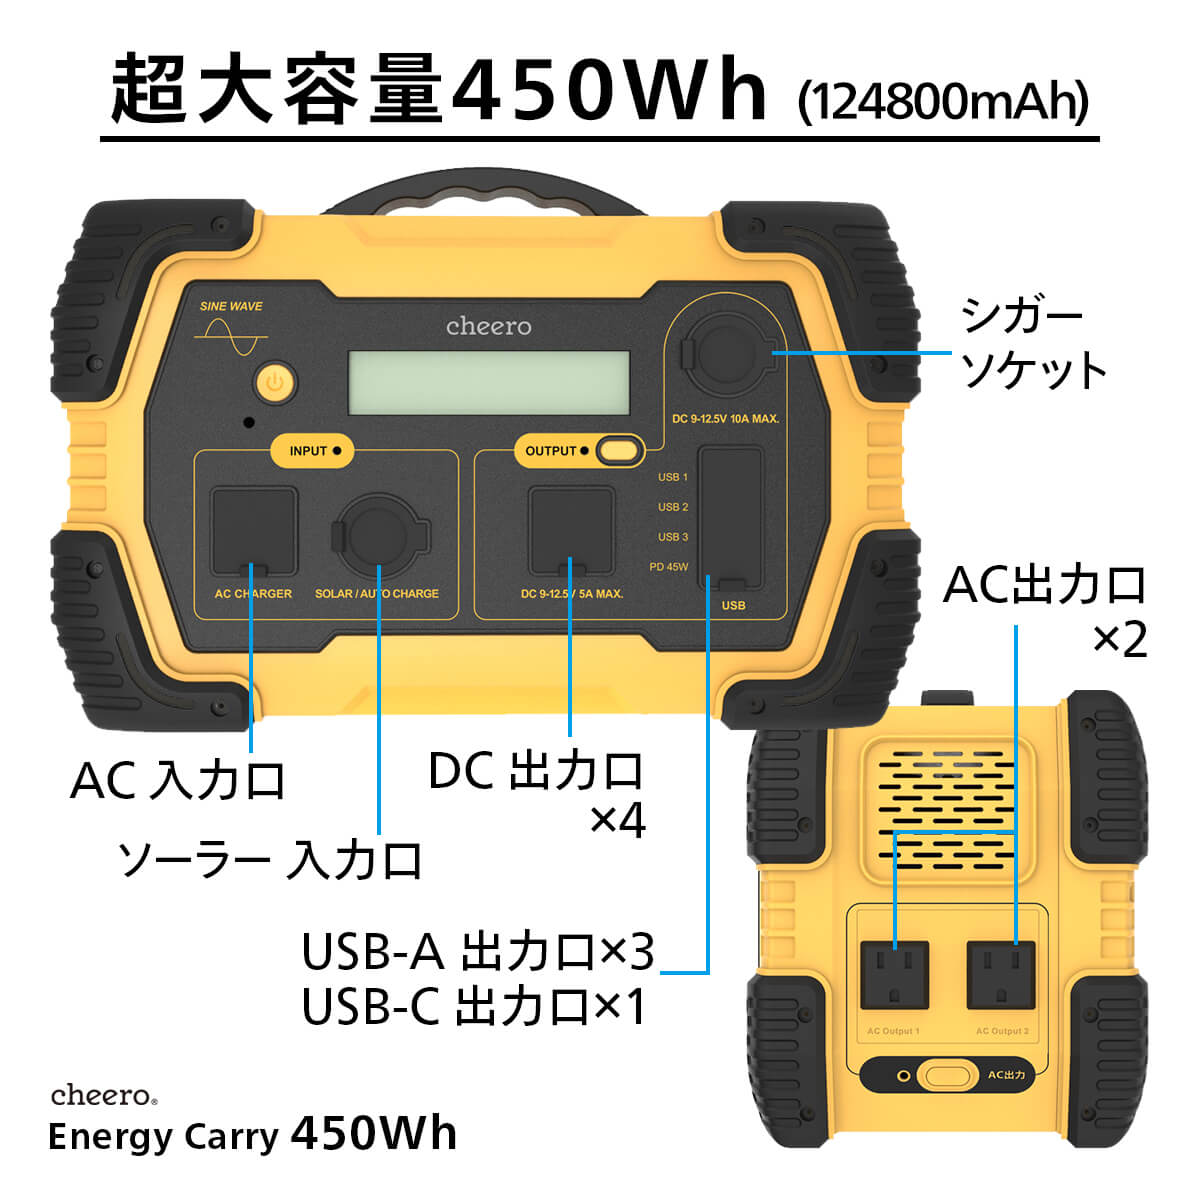 cheero Energy Carry 450Wh – cheero_official